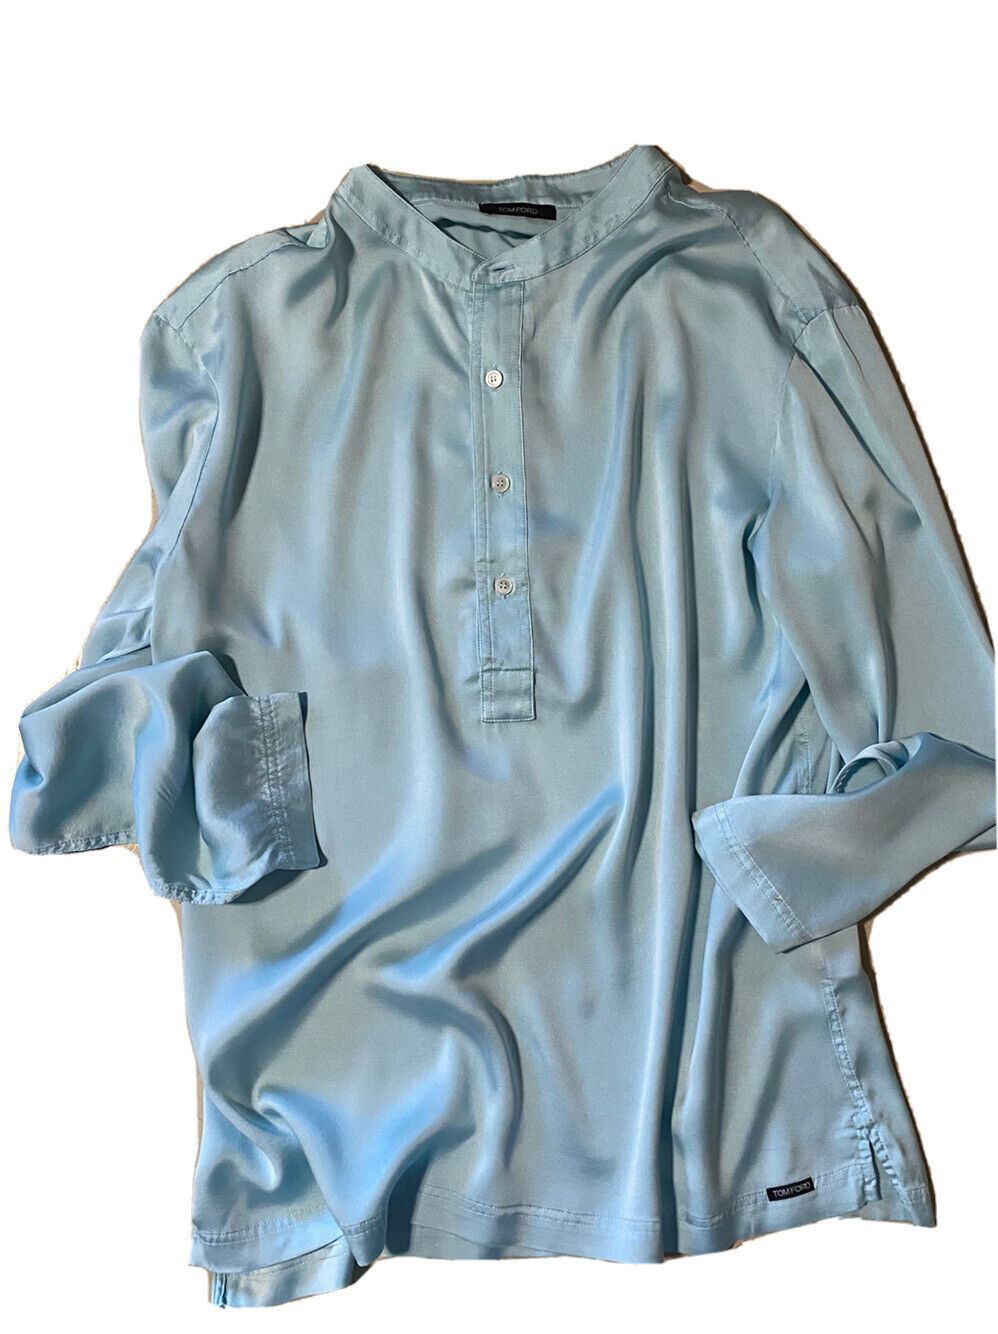 NWT $790 TOM FORD Мужская шелковая рубашка на пуговицах синего цвета, Италия